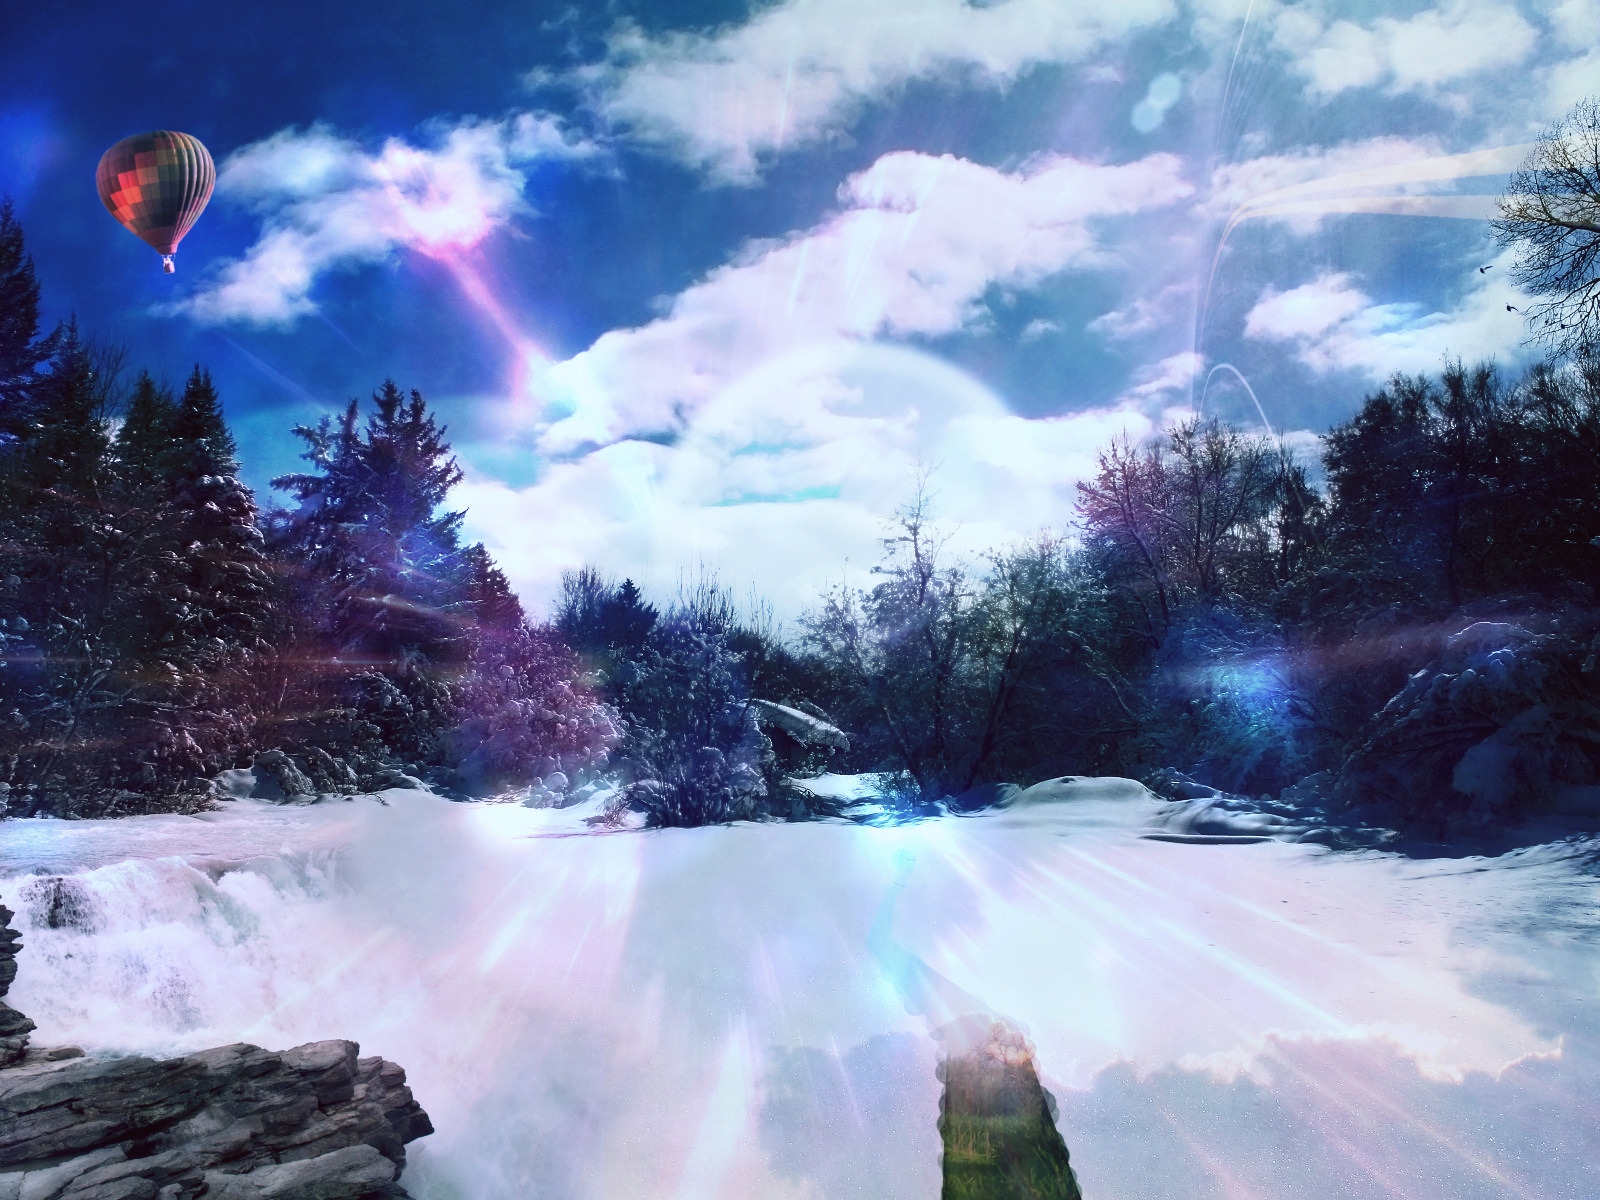 Snowy Dream for 1600 x 1200 resolution